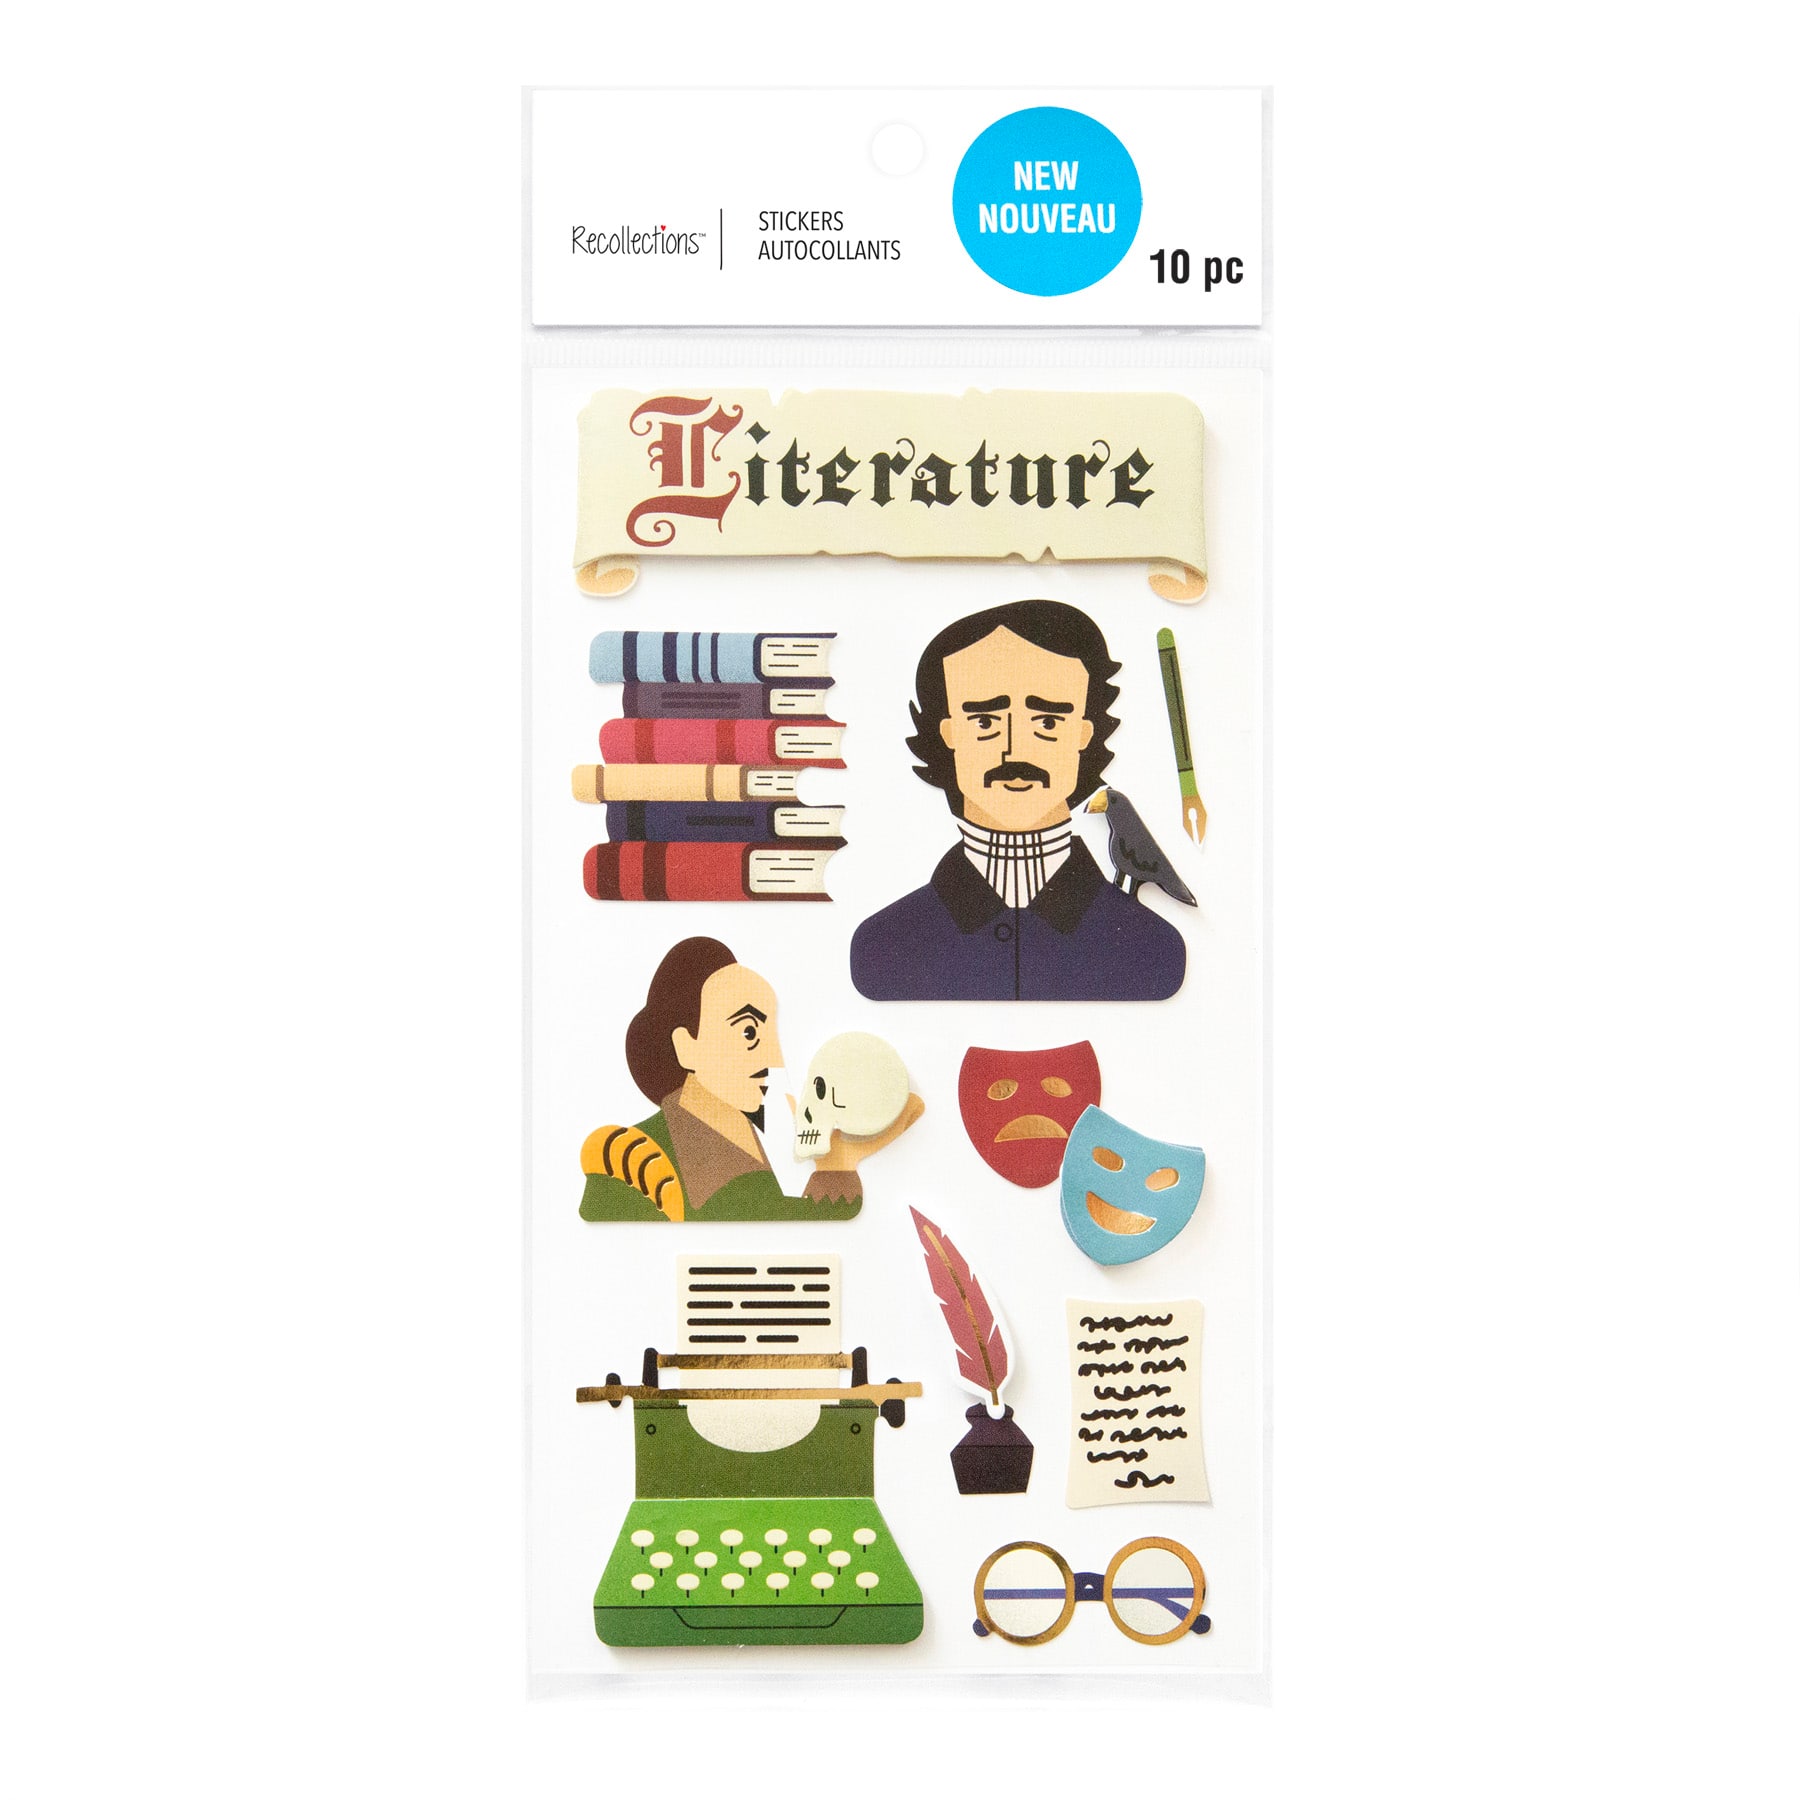 Stickers Littérature, notre catalogue - TenStickers